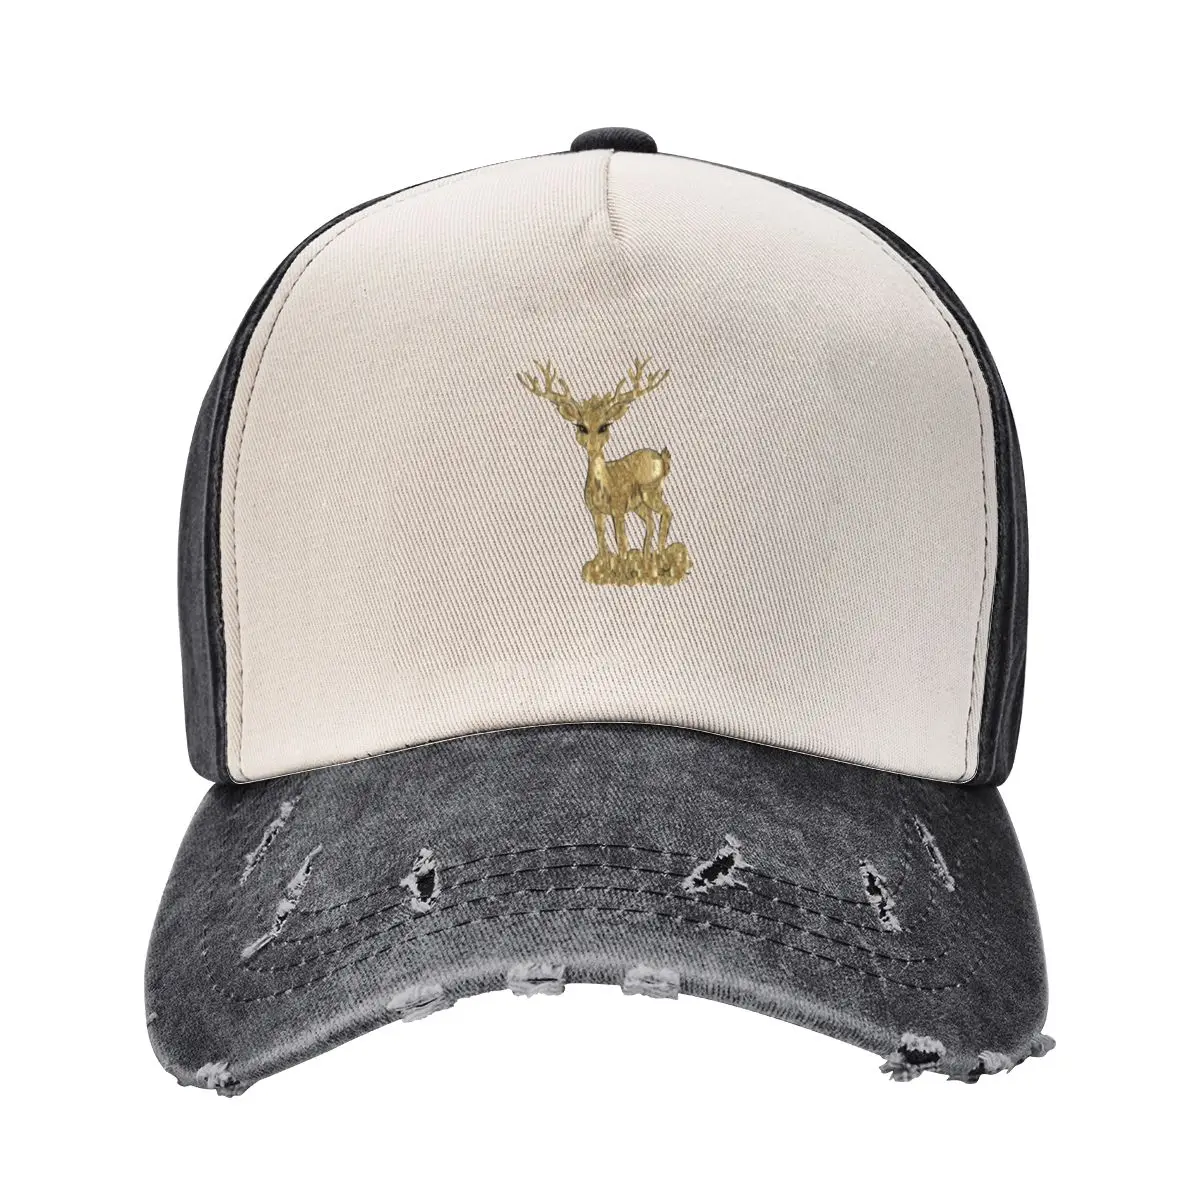 

Deer-4676478 Baseball Cap Merchandise Classic Distressed Washed Snapback Dad Hat Unisex Summer Adjustable Hats Cap